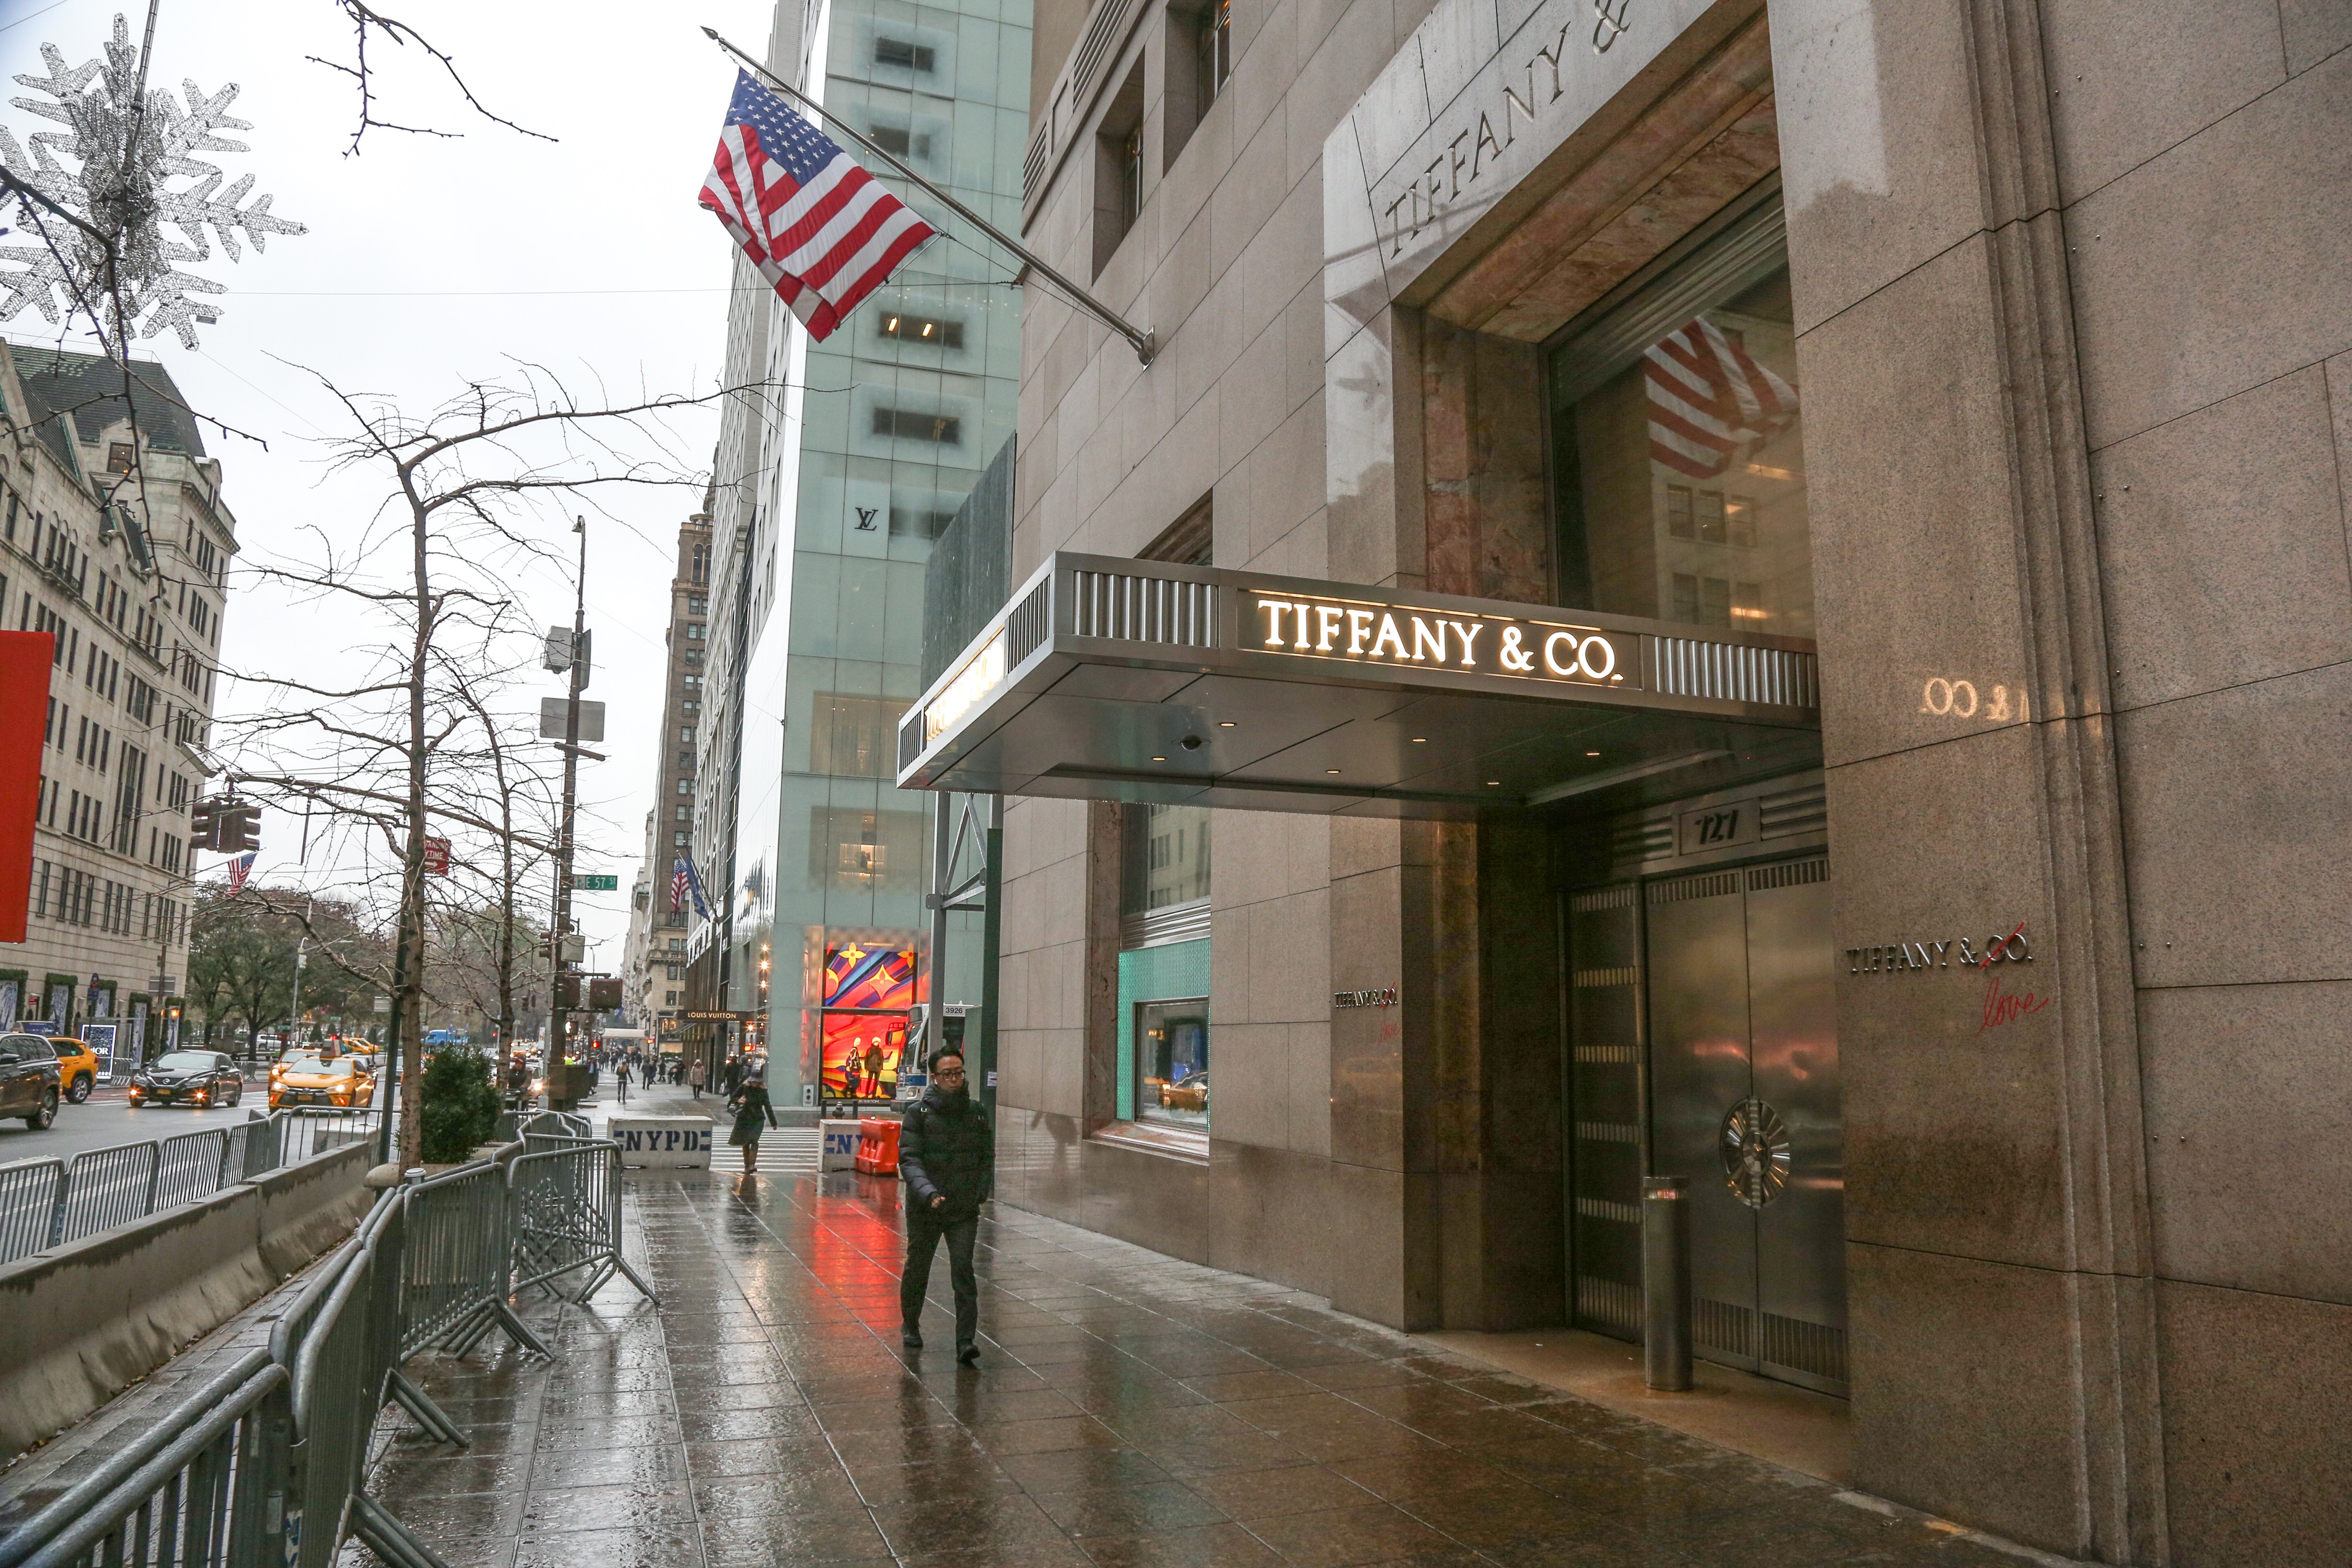 Loja da Tiffany & Co. em Nova York (Foto: Getty Images)